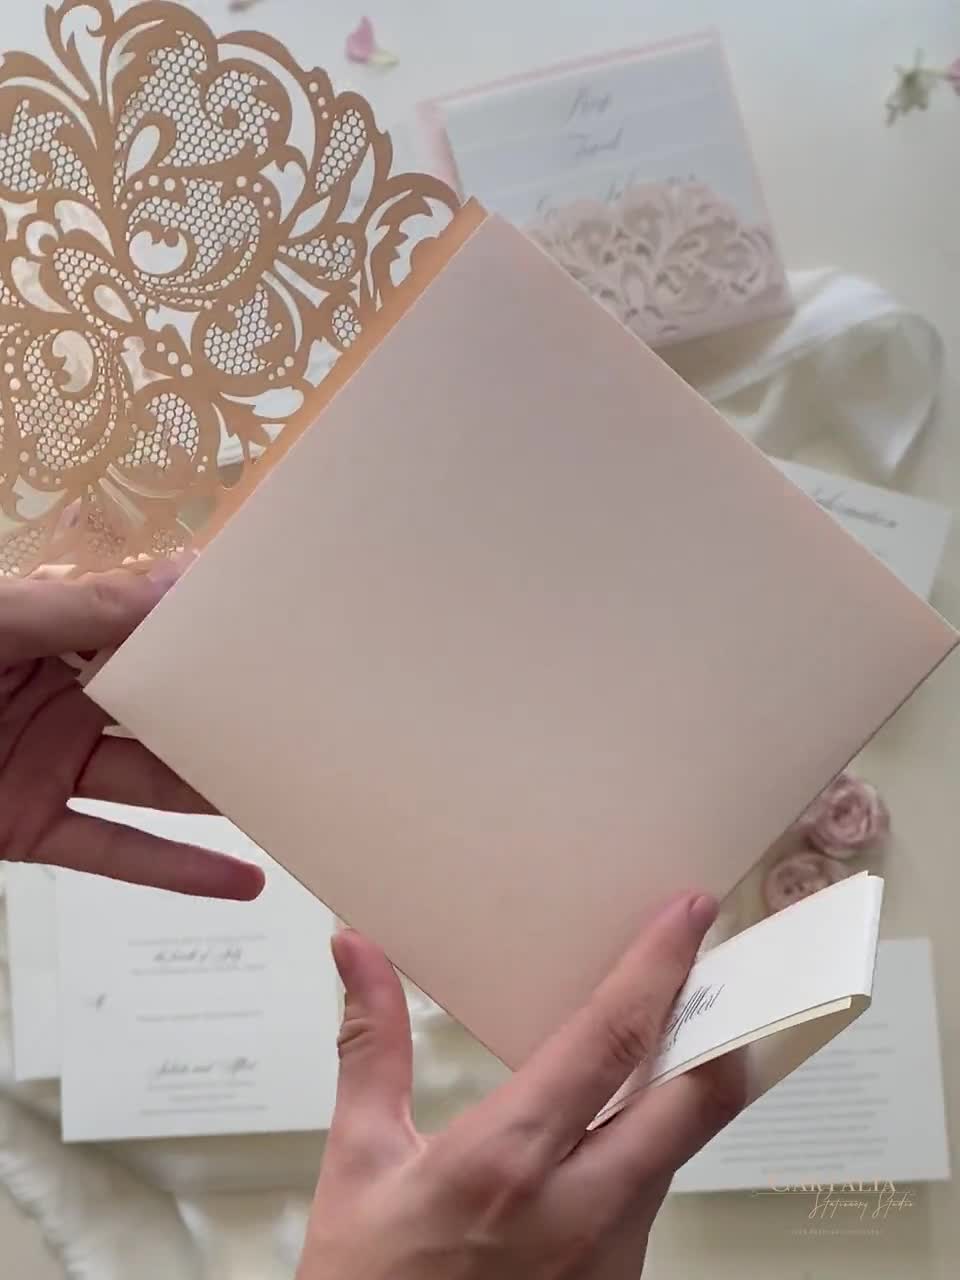 exquisite flower laser cut wedding invitations with matt champagne